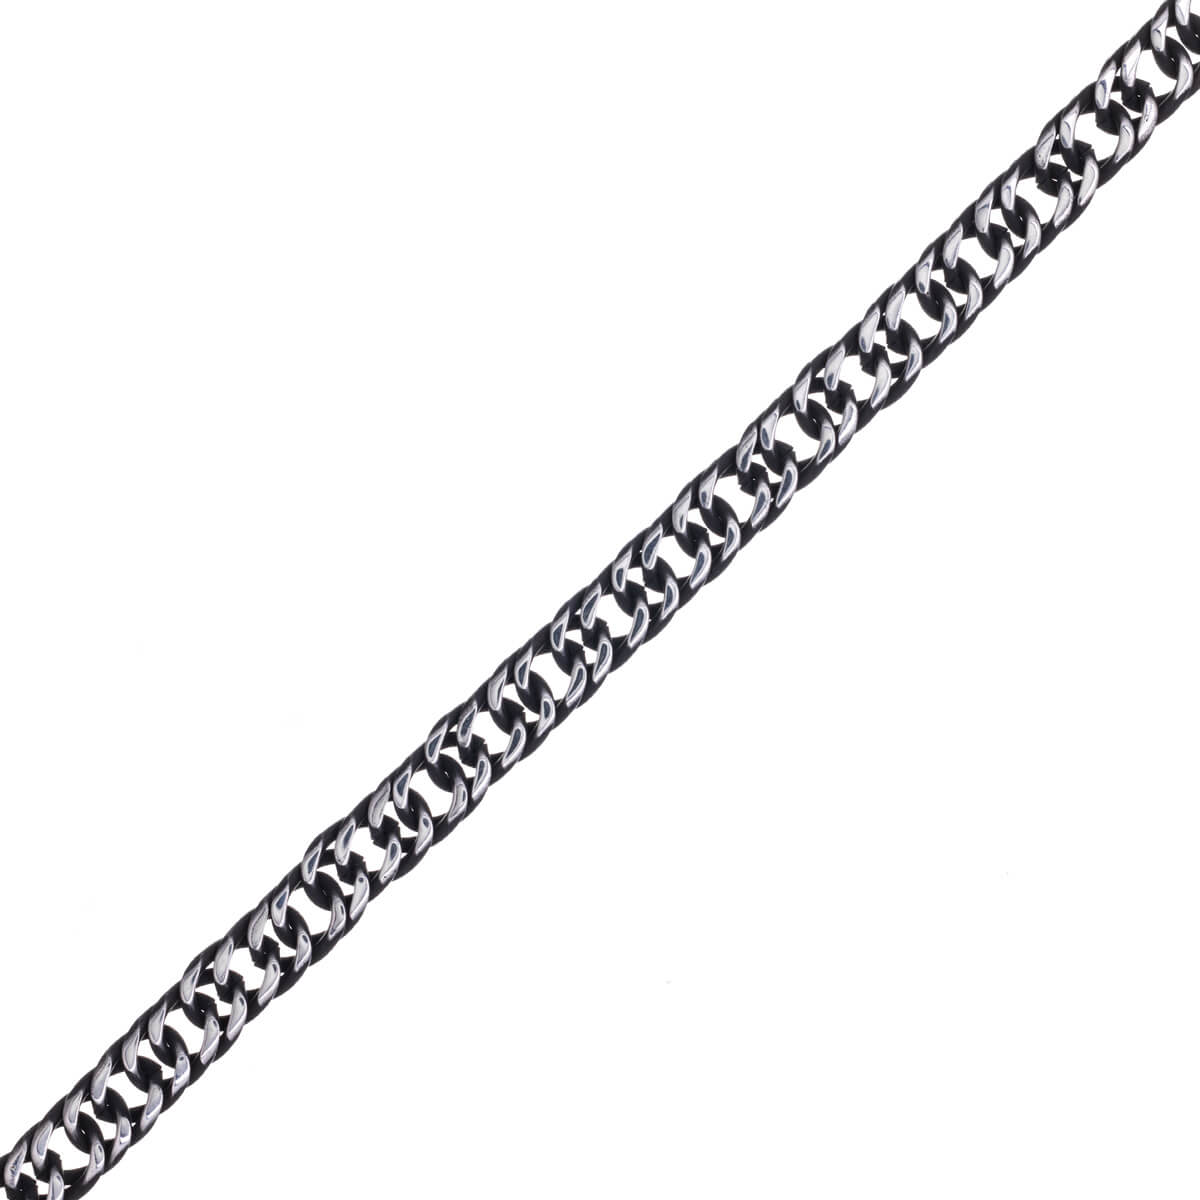 Angular dense armour chain dark bracelet 20,5cm 8mm (Steel 316L)